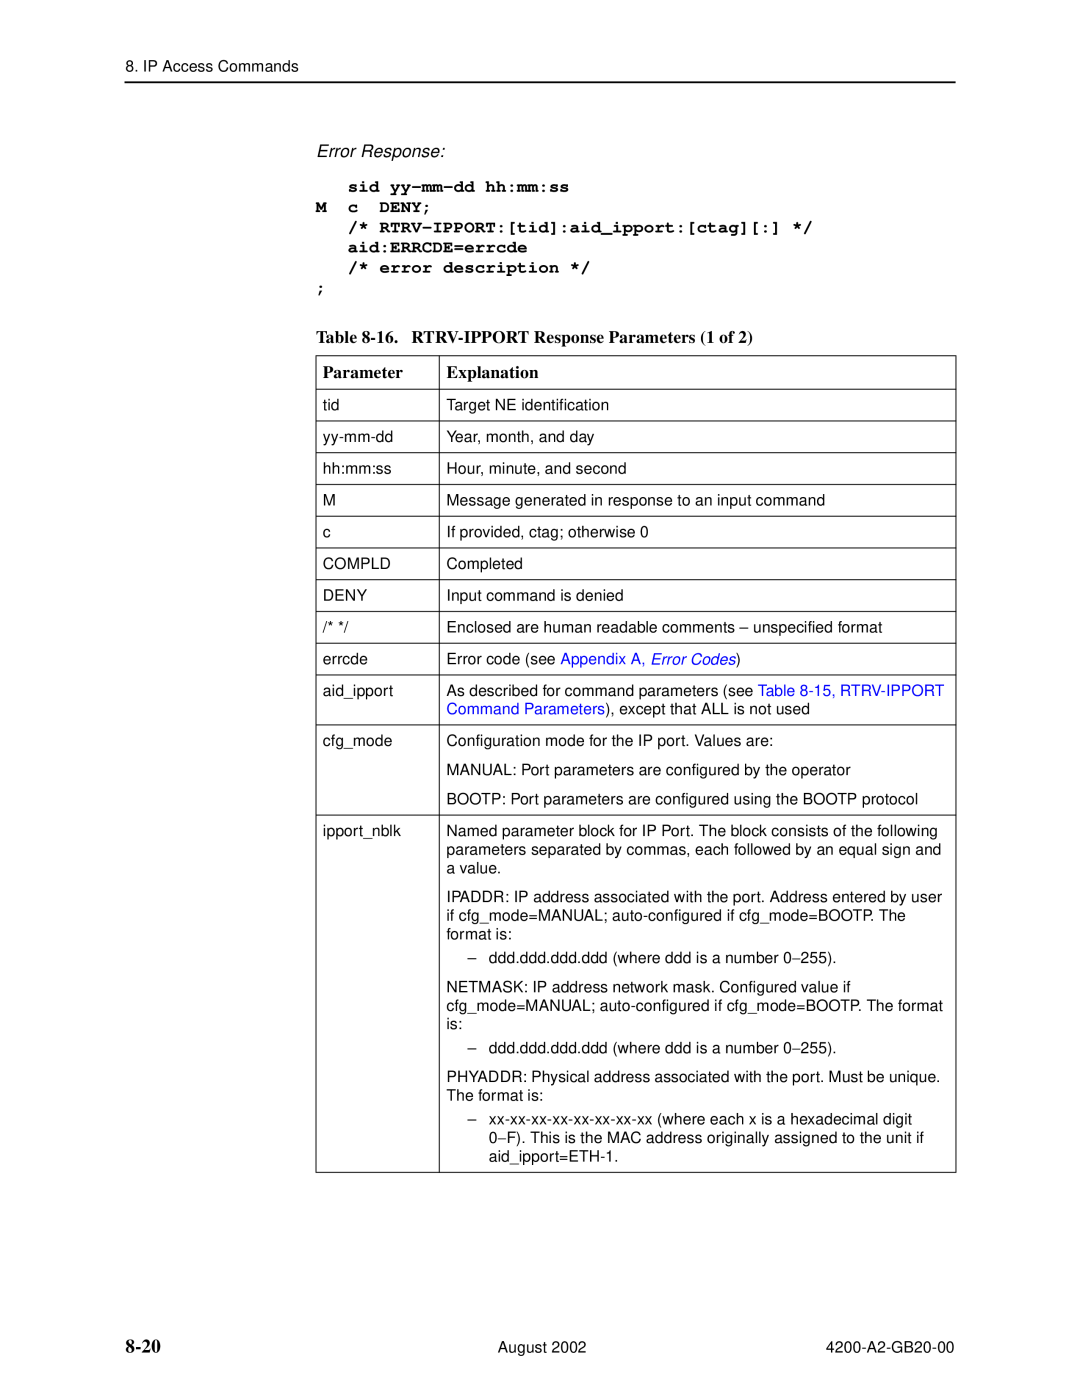 Paradyne 4200 manual 8-20, RTRV-IPPORTtidaidipportctag */ aidERRCDE=errcde error description, Error Response, Parameter 